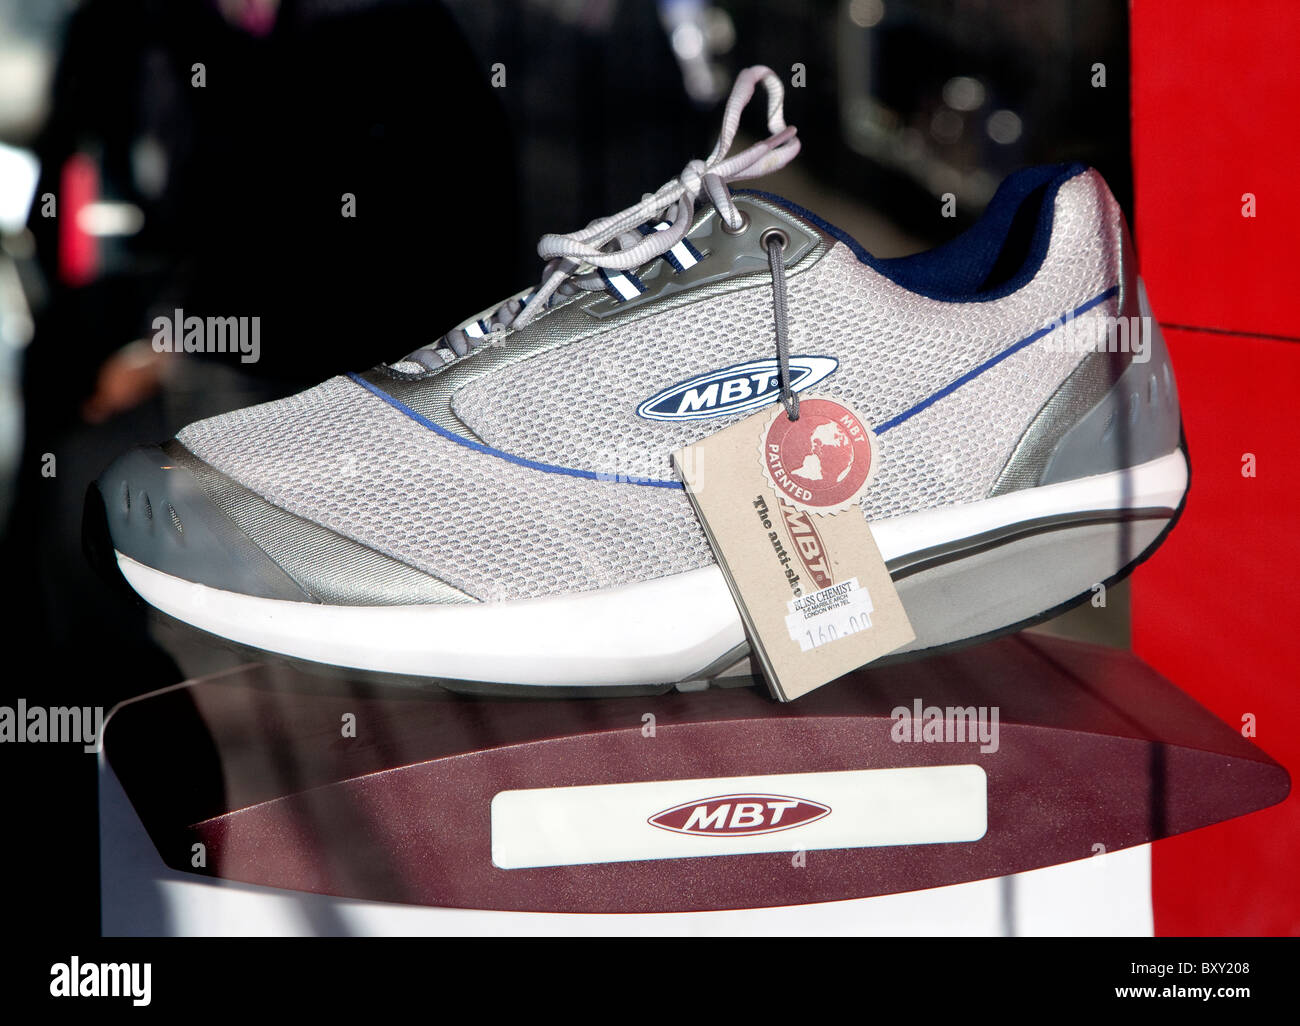 MBT "anti-shoe" in London shop Stock Photo - Alamy